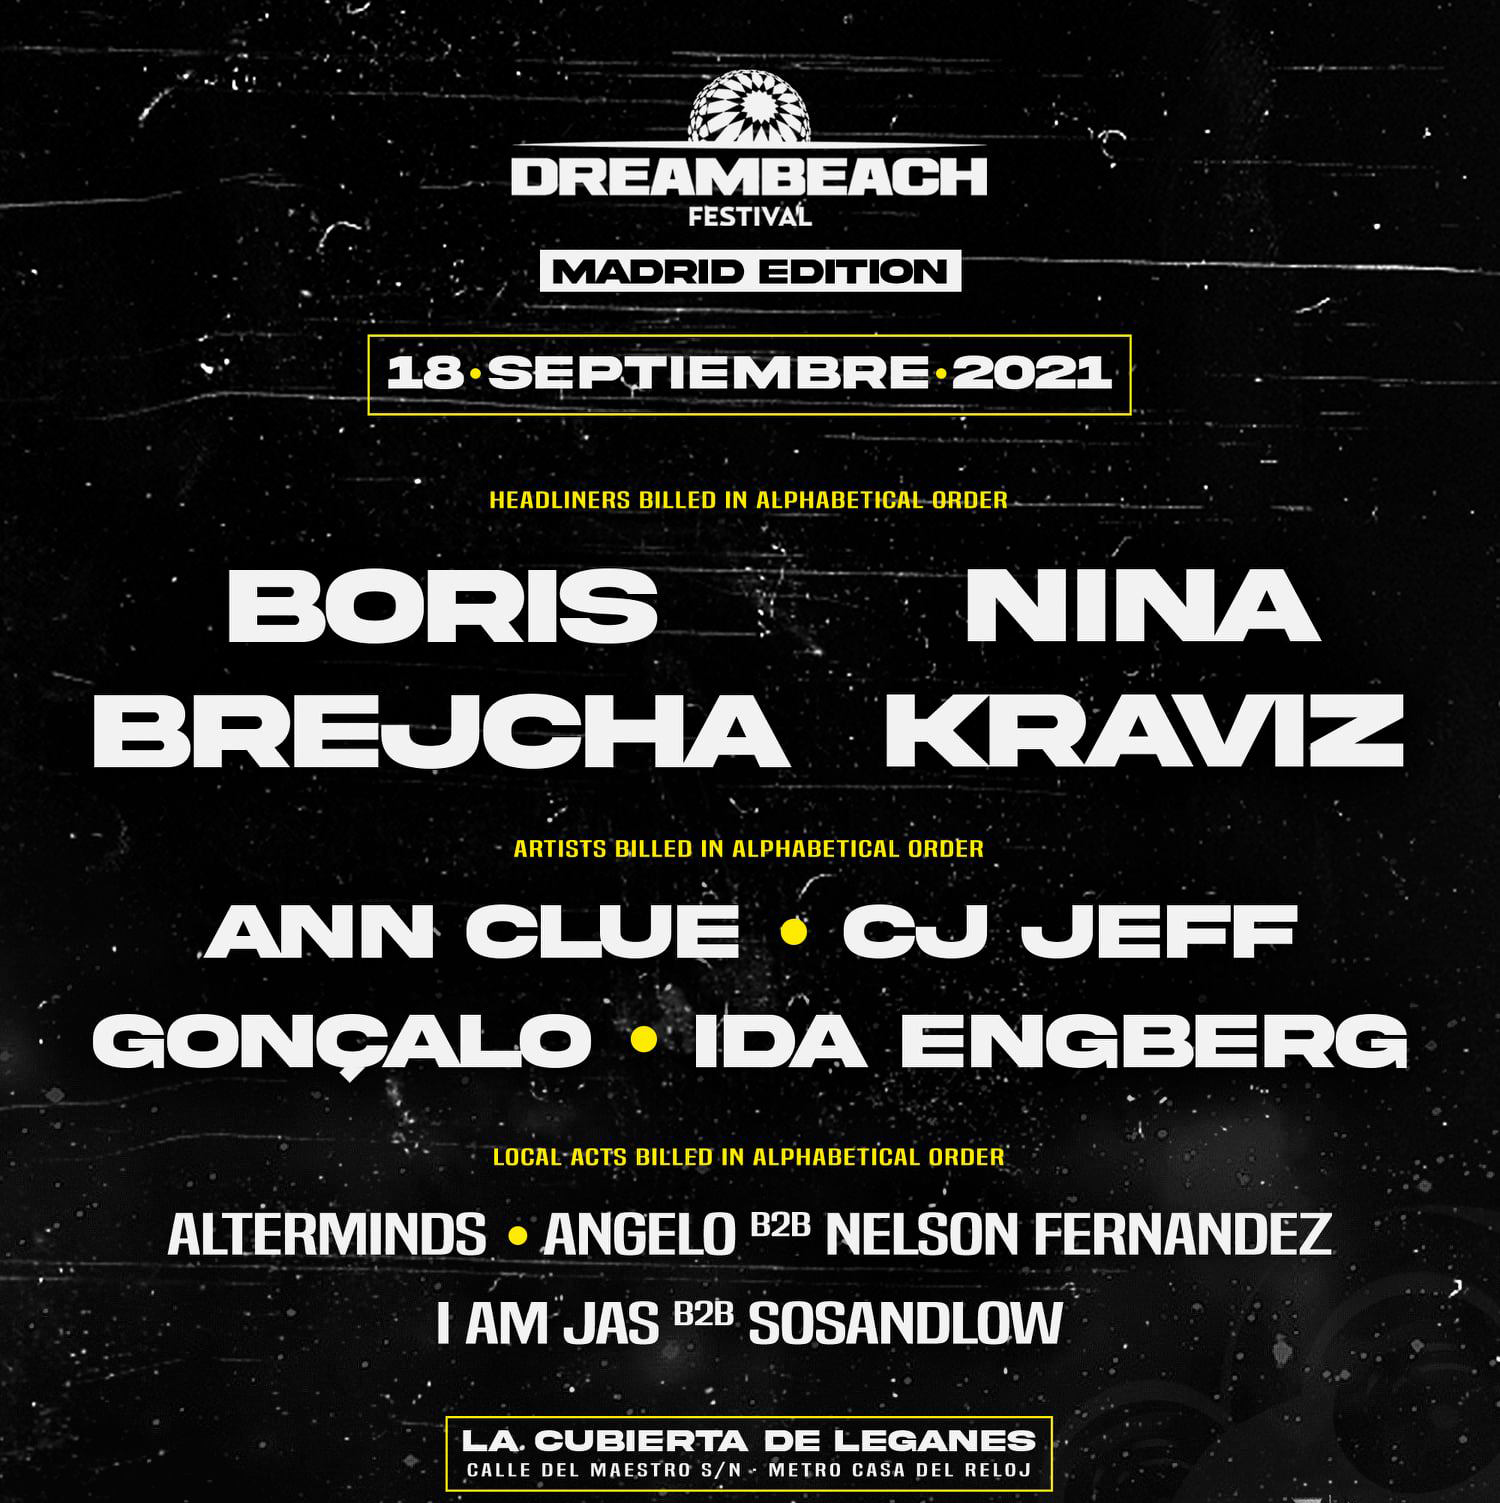 Dreambeach Festival Madrid Edition 2021